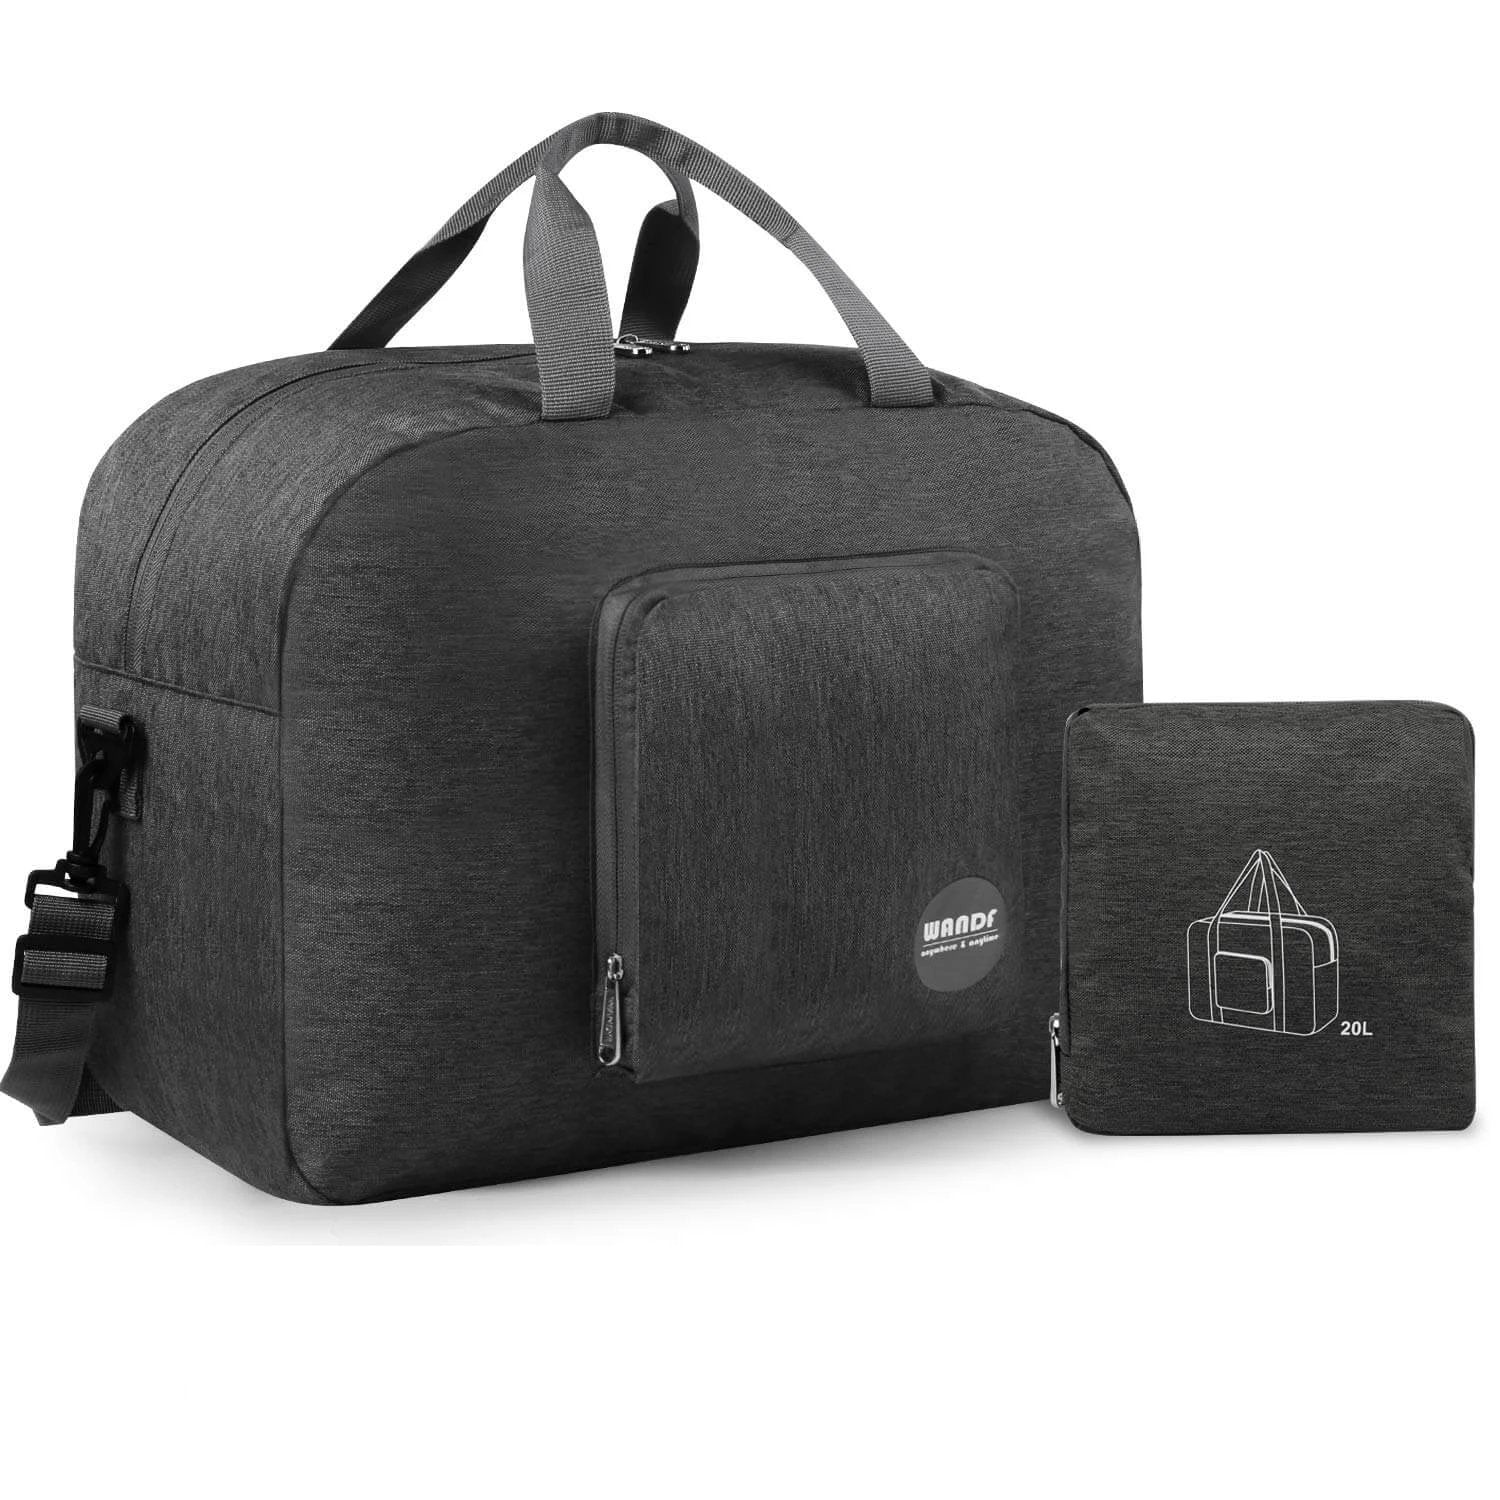 Wandf Foldable Duffle Bag for Travel Gym Sports